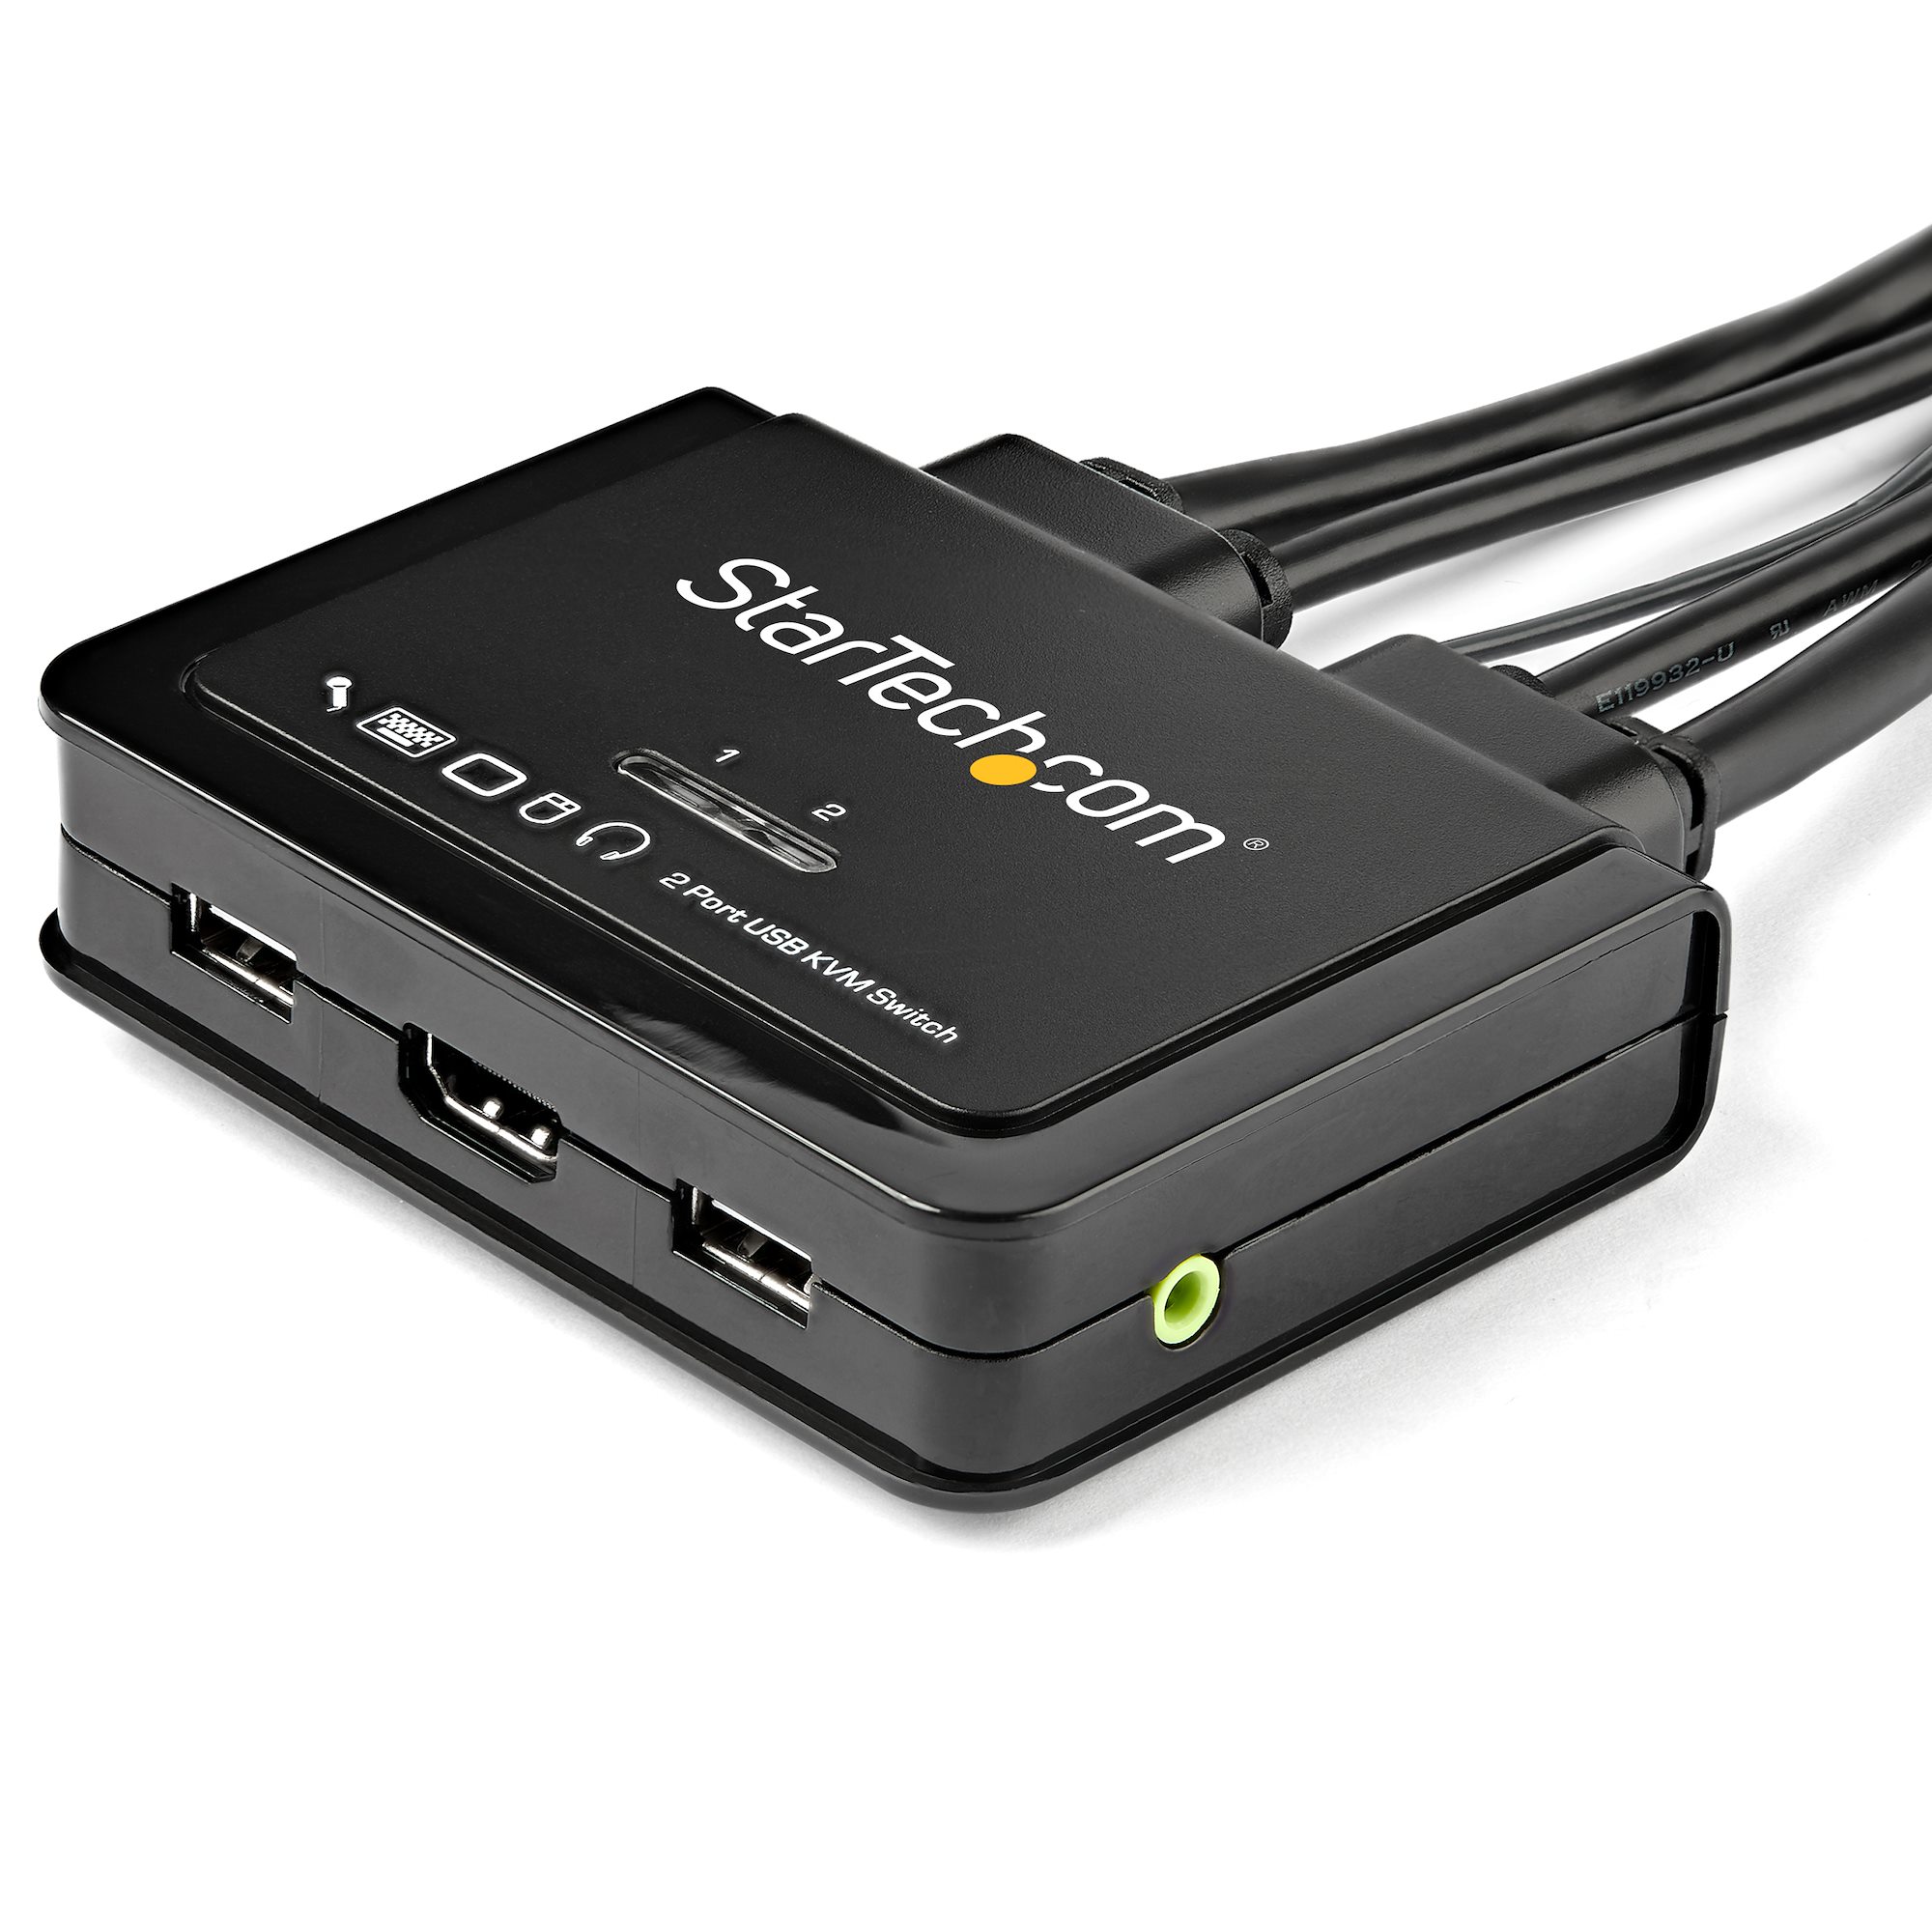 4-Port HDMI KVM Switch - USB 3.0 - 1080p - KVM Switches, Server Management